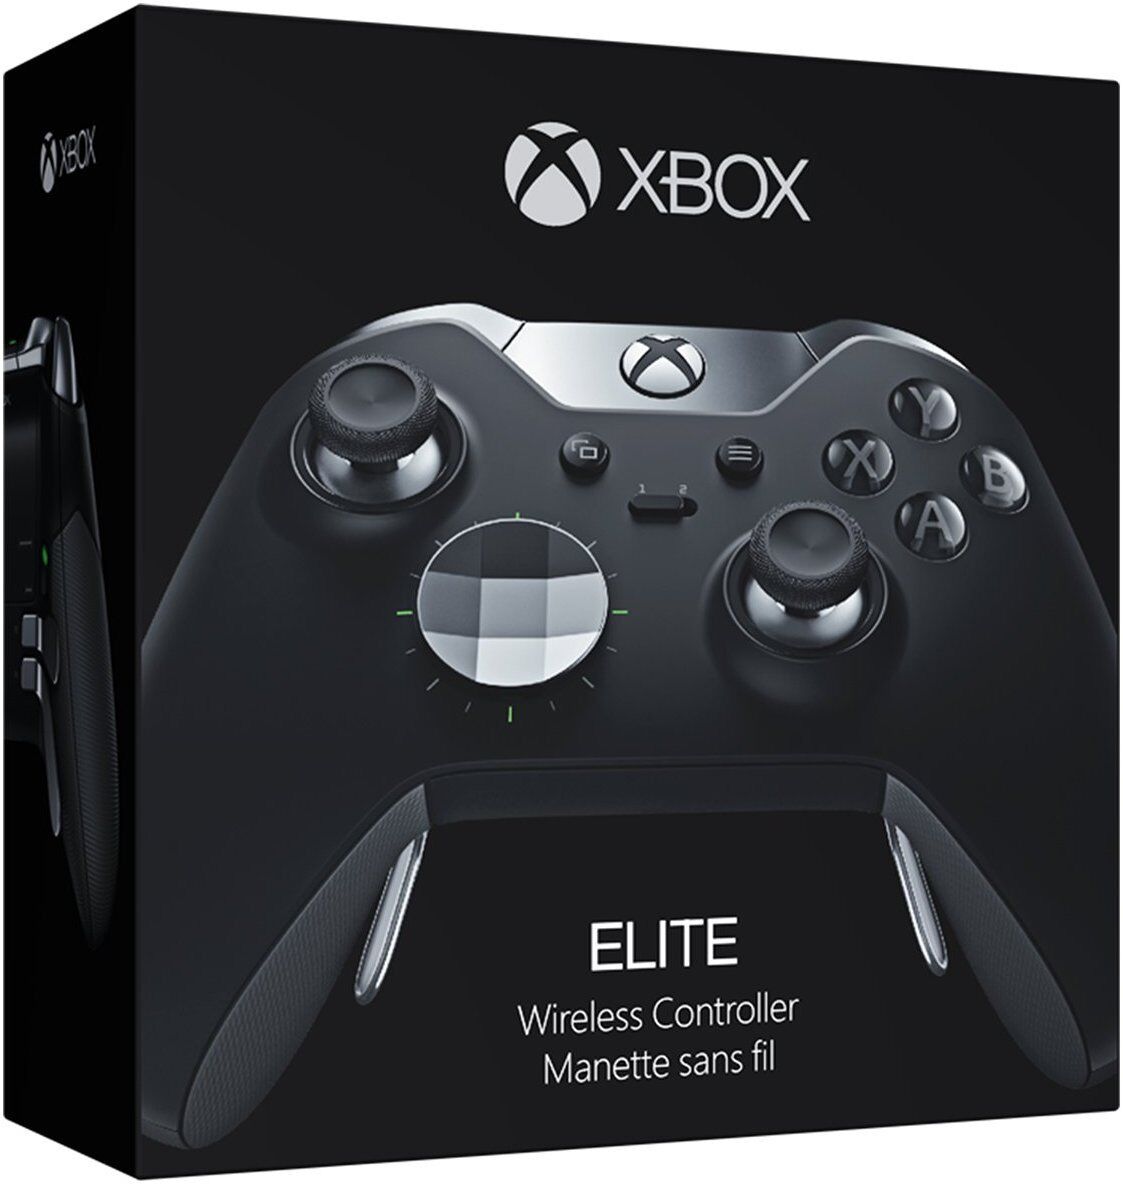 Official Microsoft Xbox One Elite Wireless Controller - Black - HM3-00001 In Box